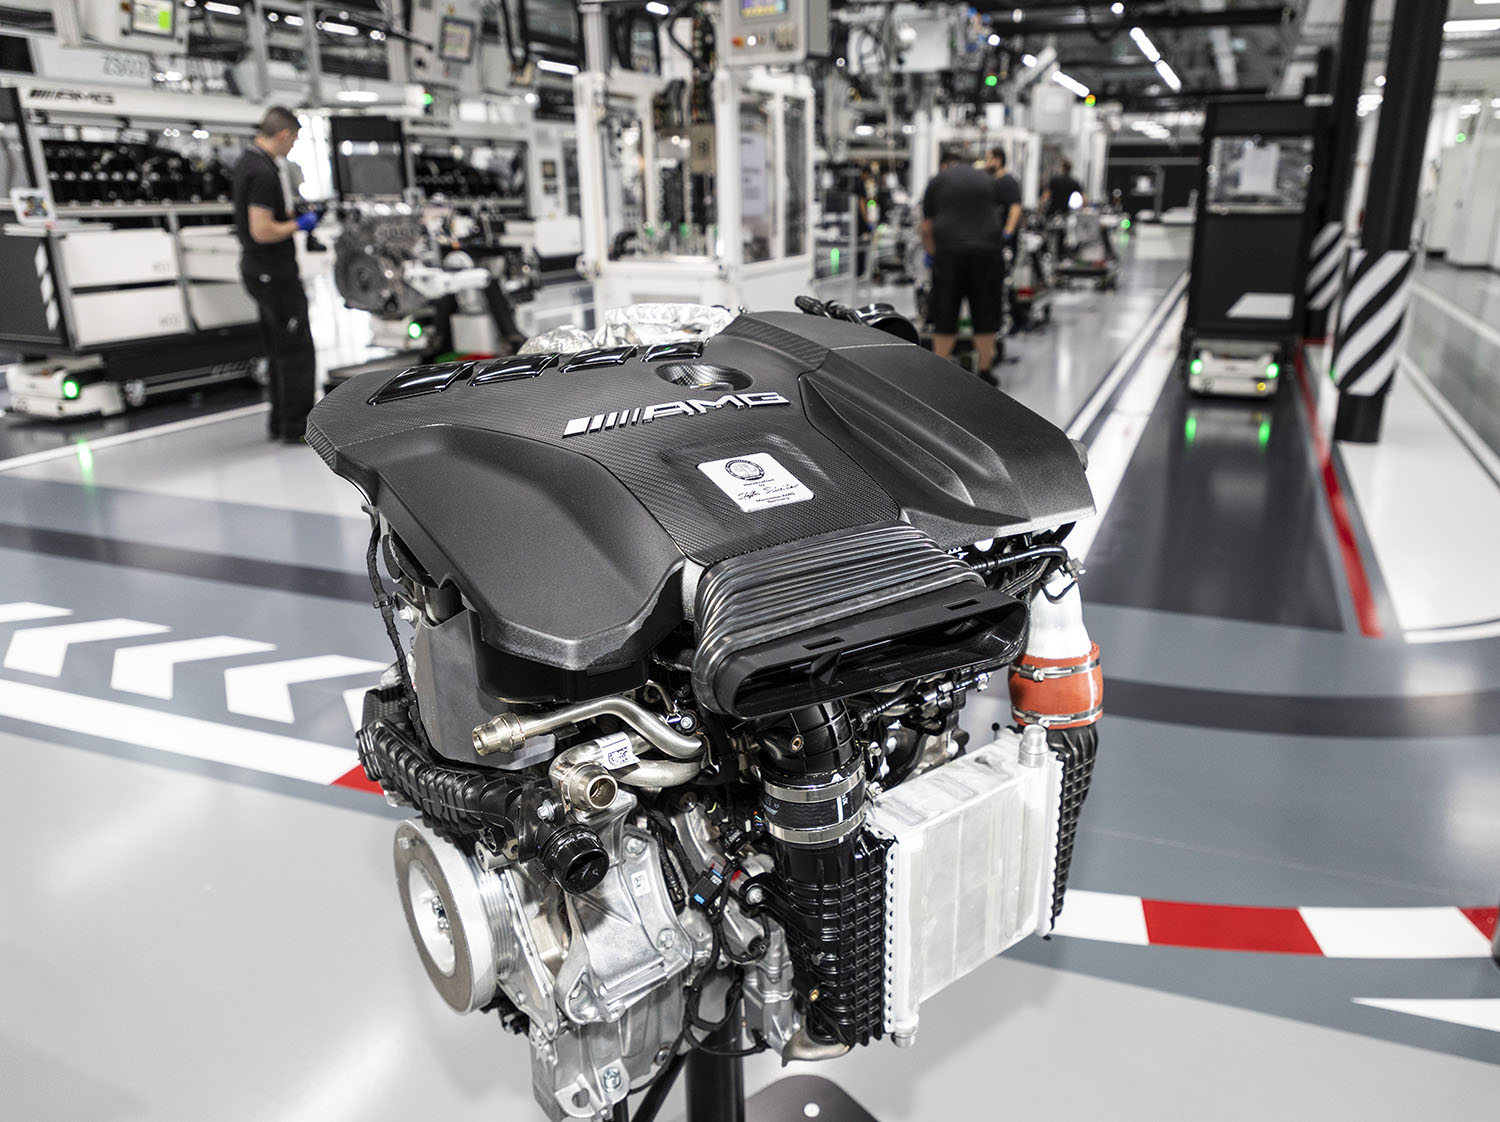 Mercedes-AMG M139 2.0L, turbocharged, four-cylinder engine